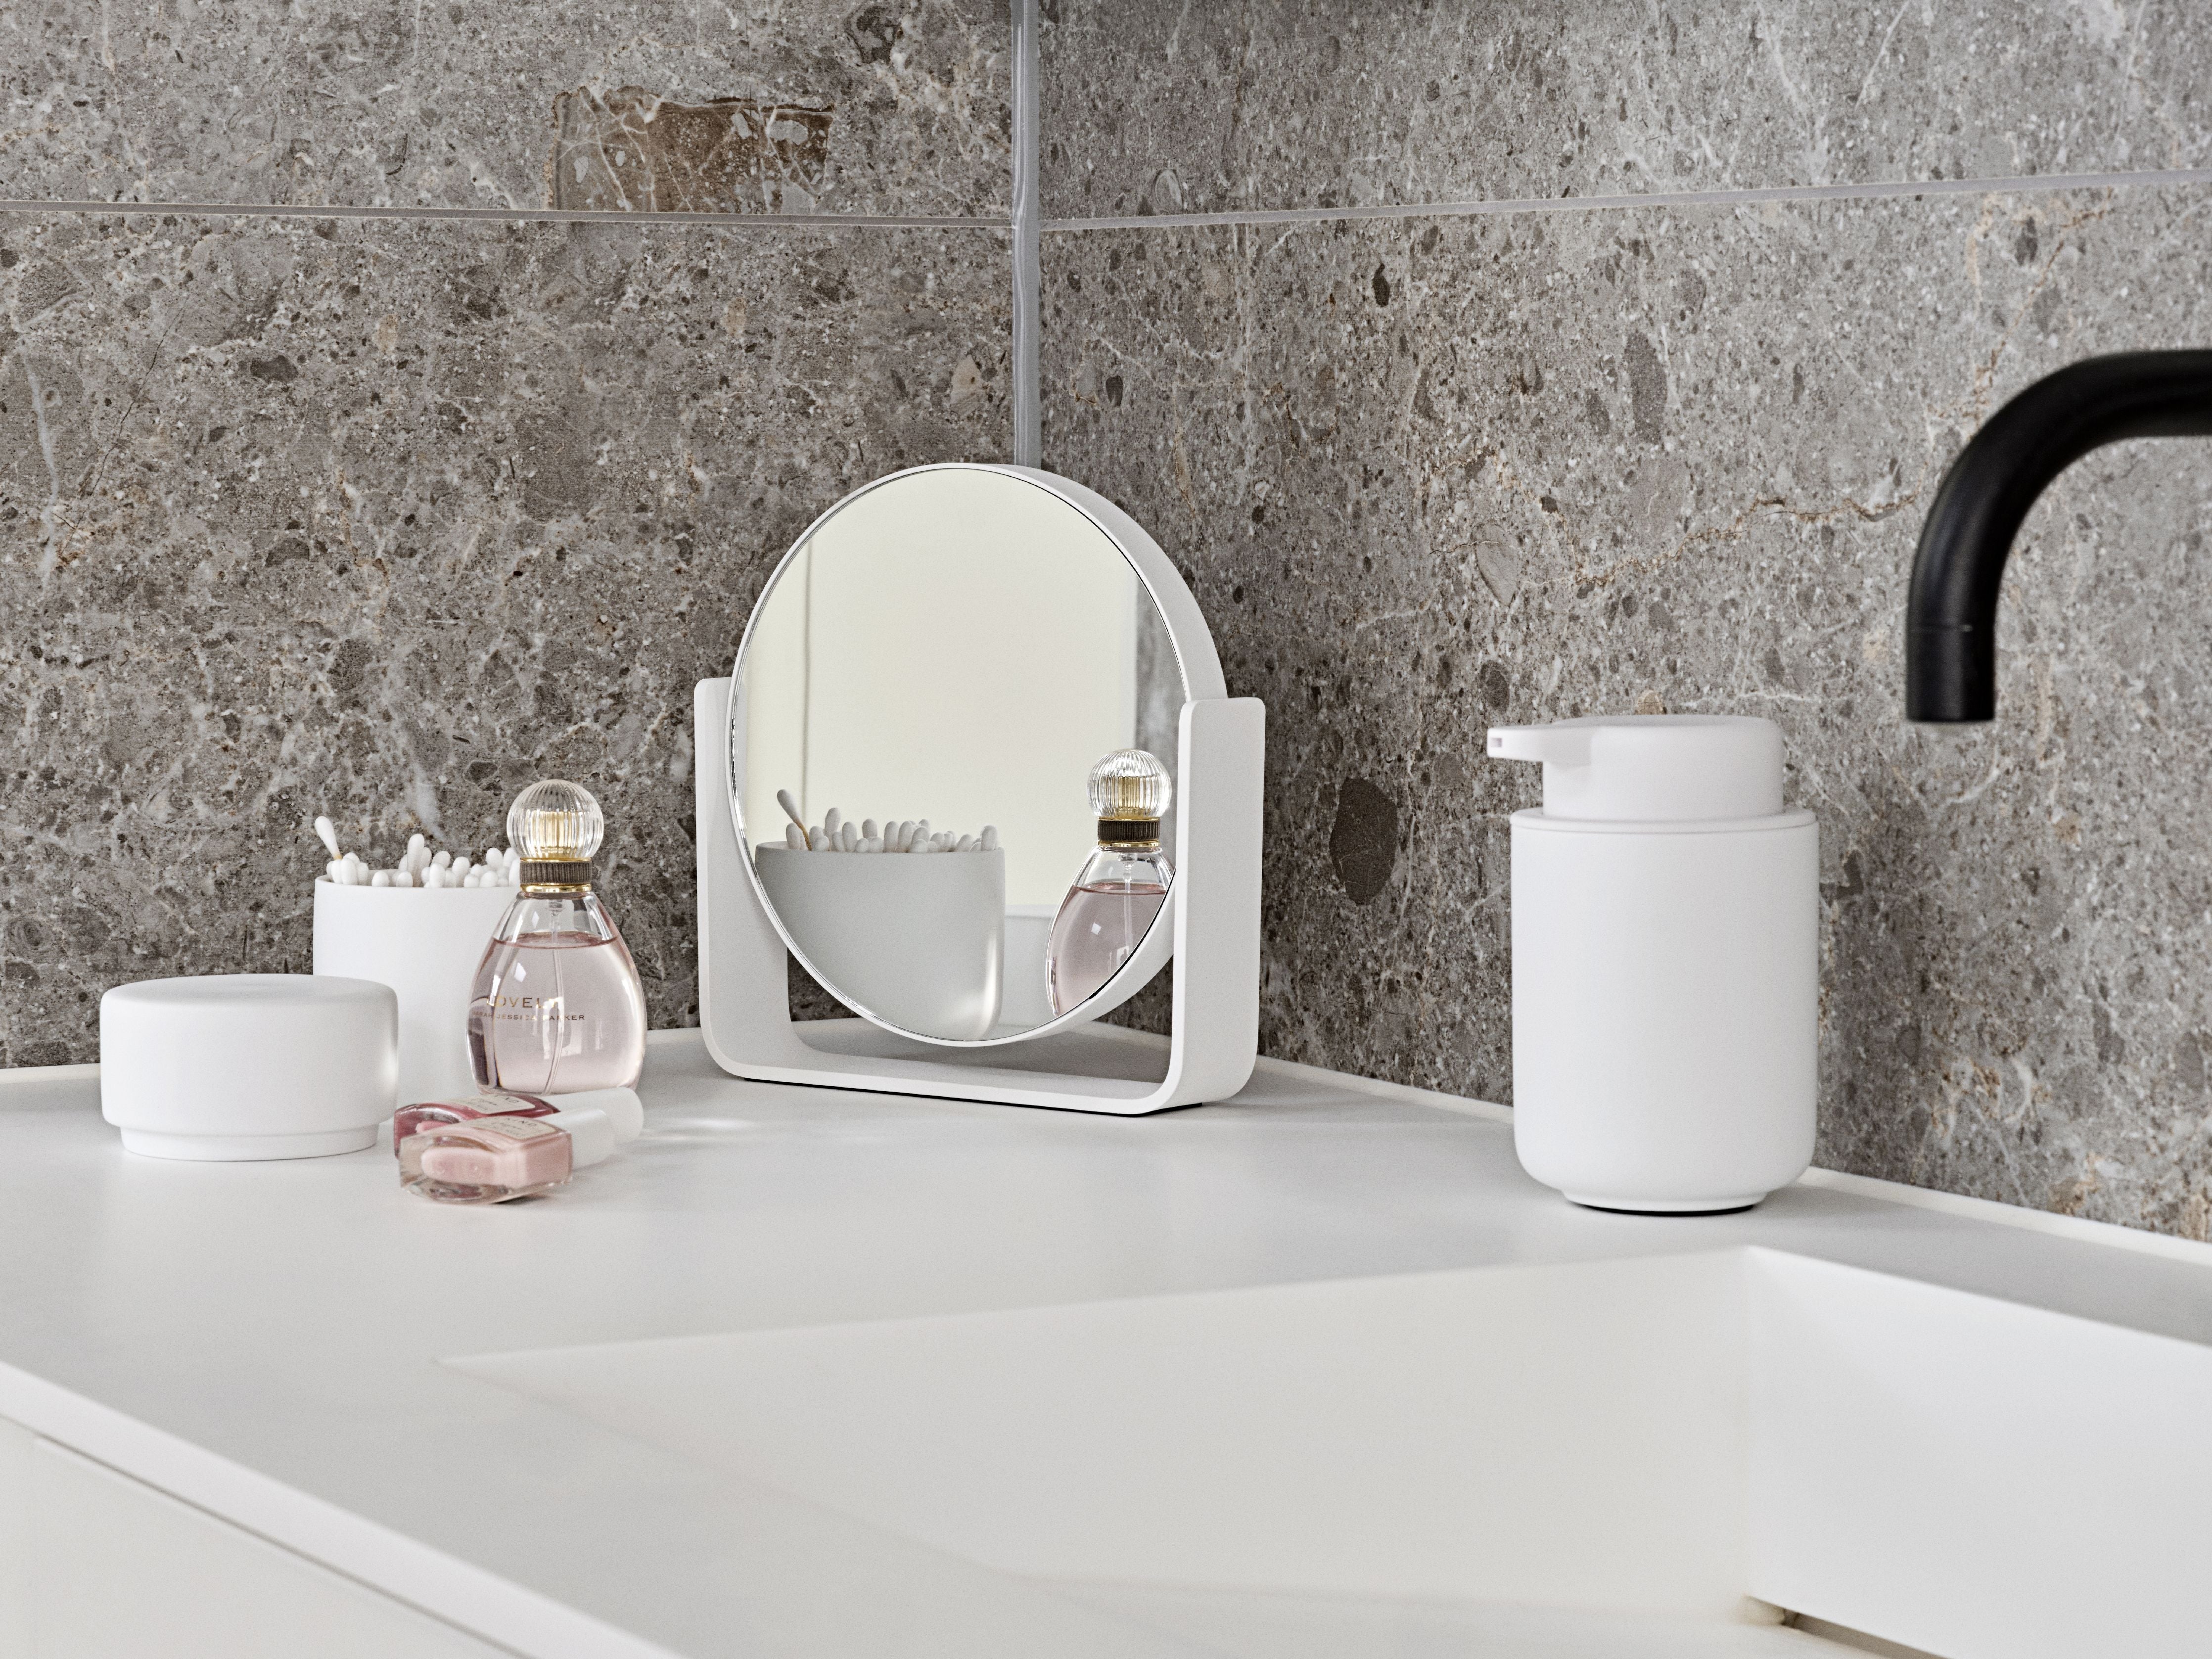 Miroir de table Ume de zone de Danemark, blanc